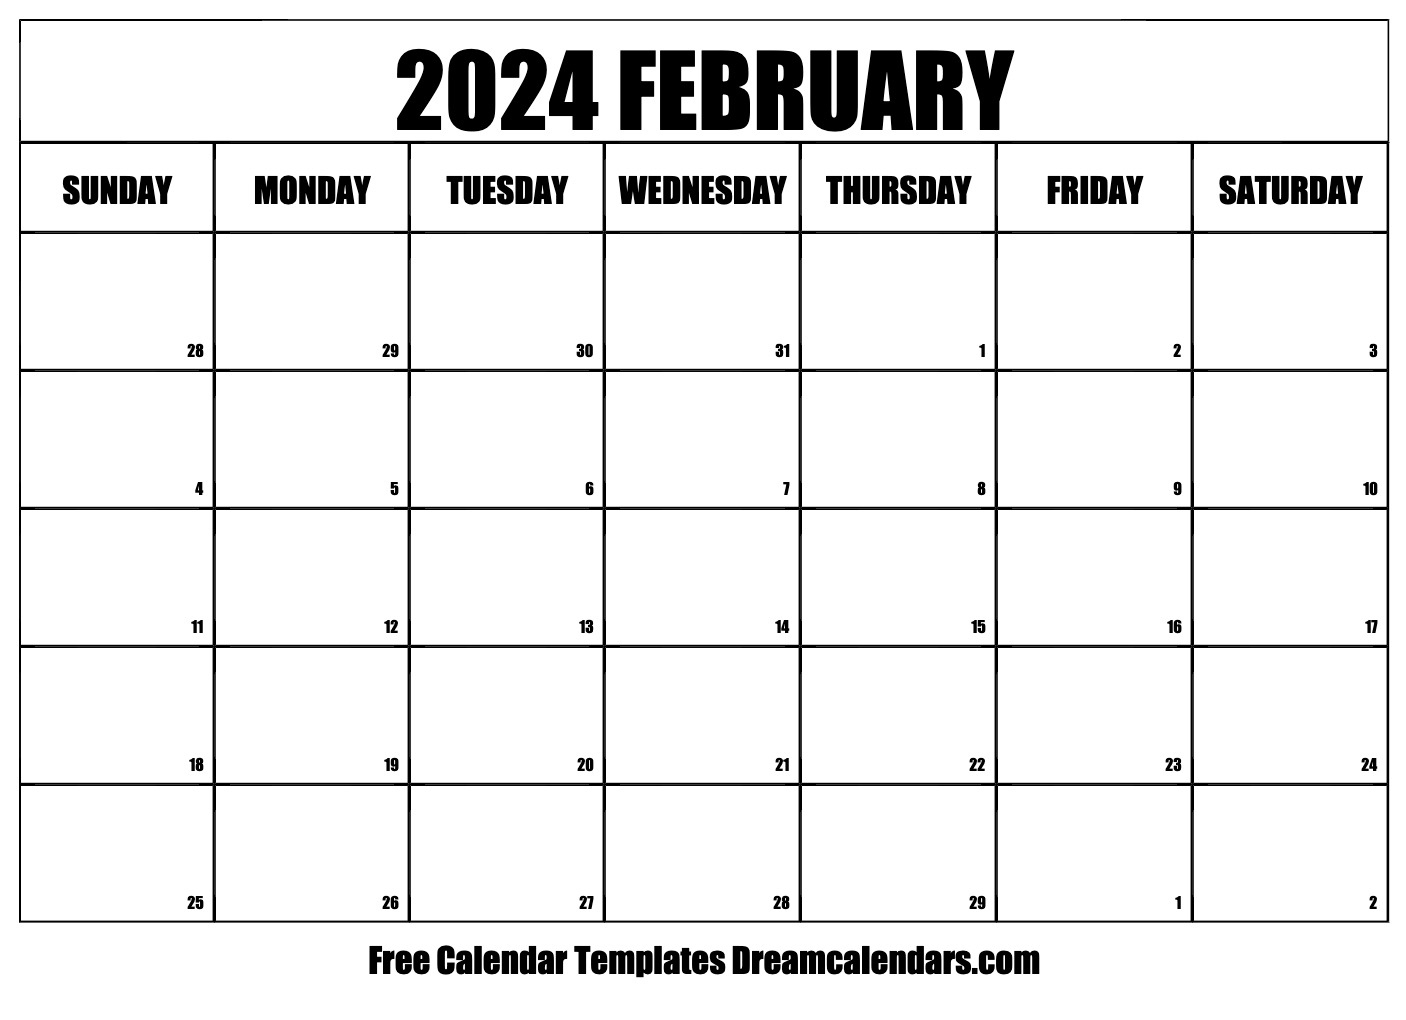 February 2024 Printable Calendar Web January And February 2024 Calendar - Free Printable 2024 Calender With Pigs